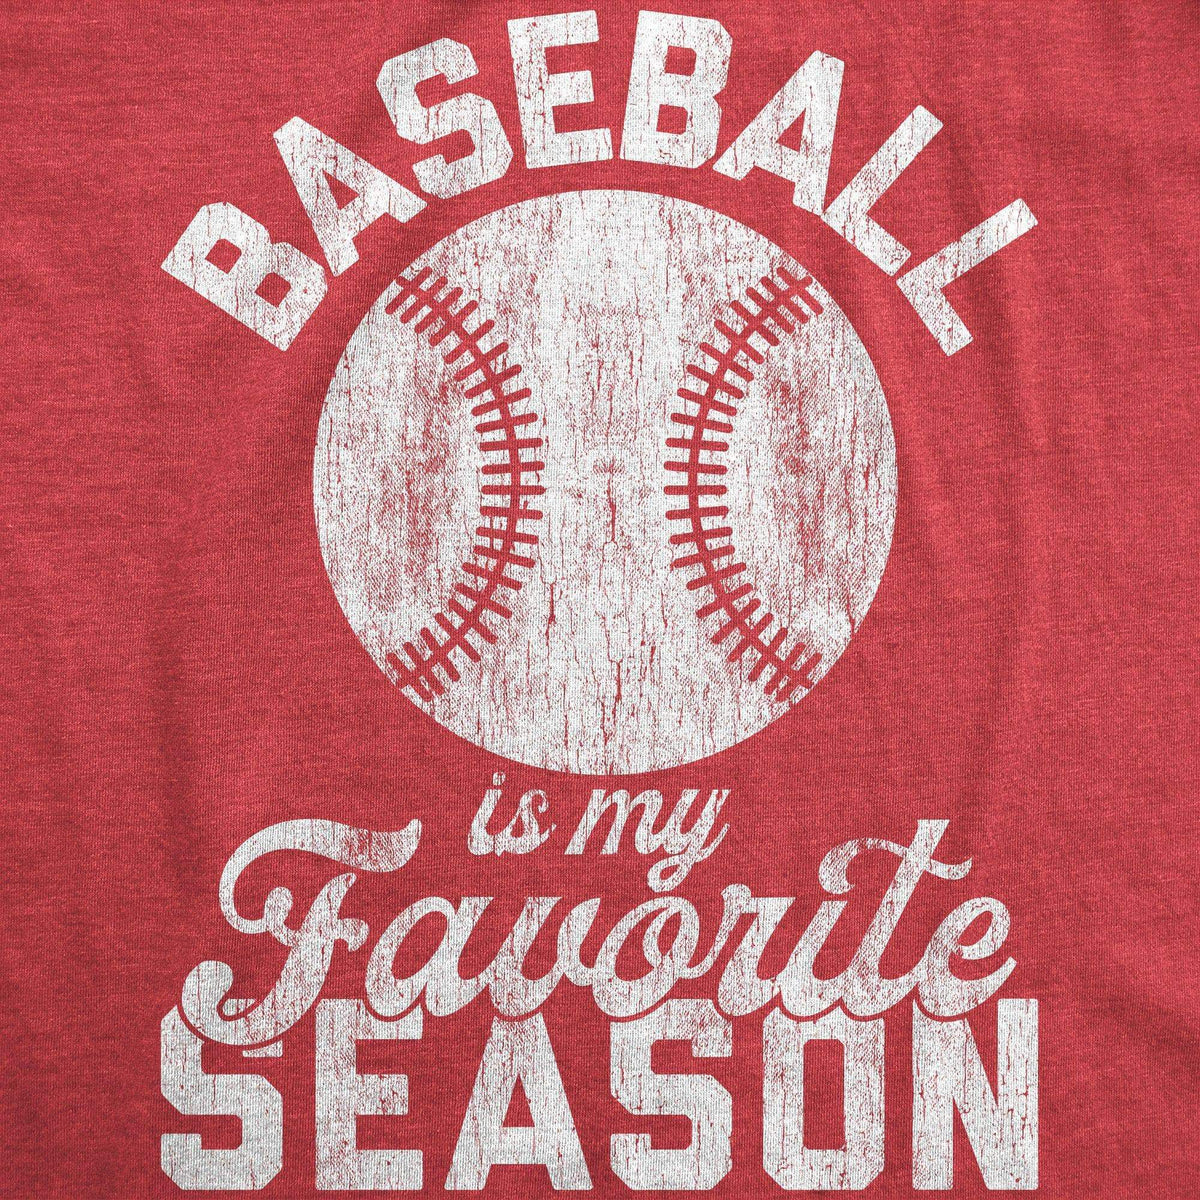 Baseball Is My Favorite Season Men&#39;s Tshirt - Crazy Dog T-Shirts